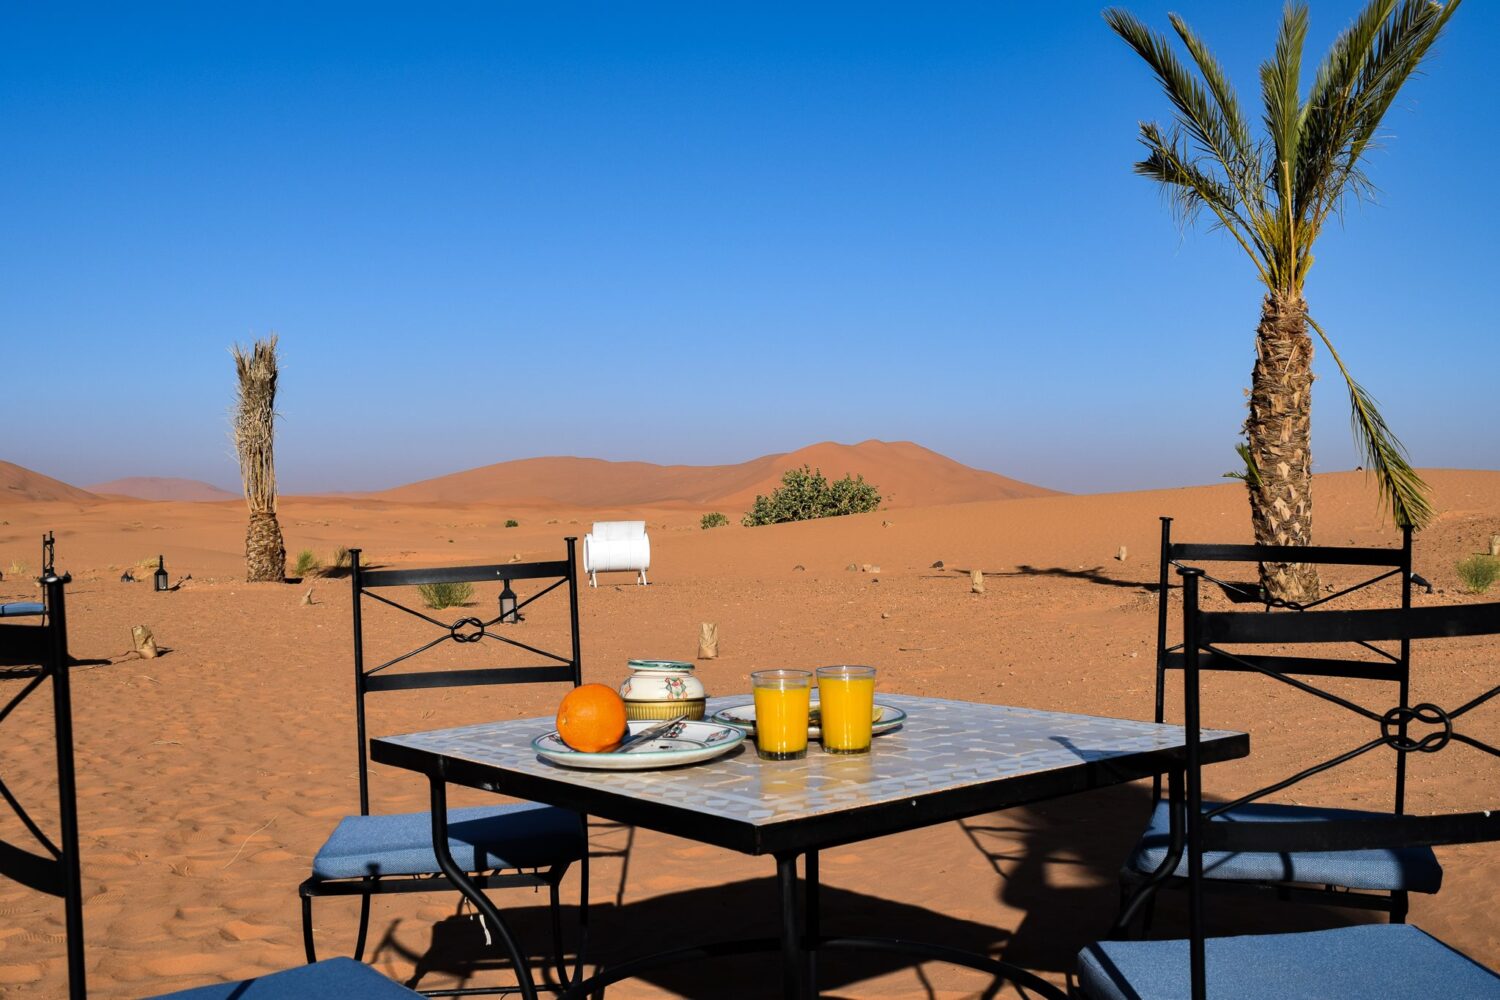 Private desert tour from Marrakech